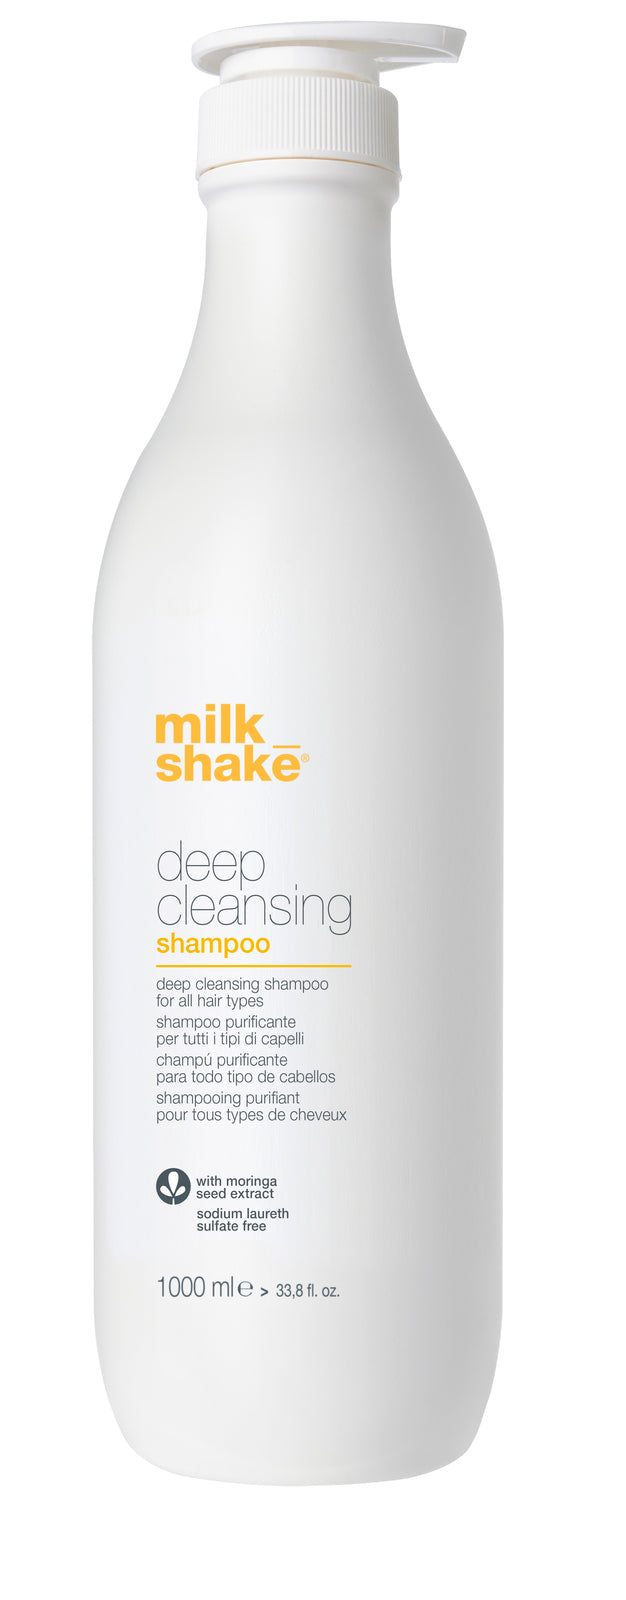 Milkshake deep cleansing shampoo 1 Litre